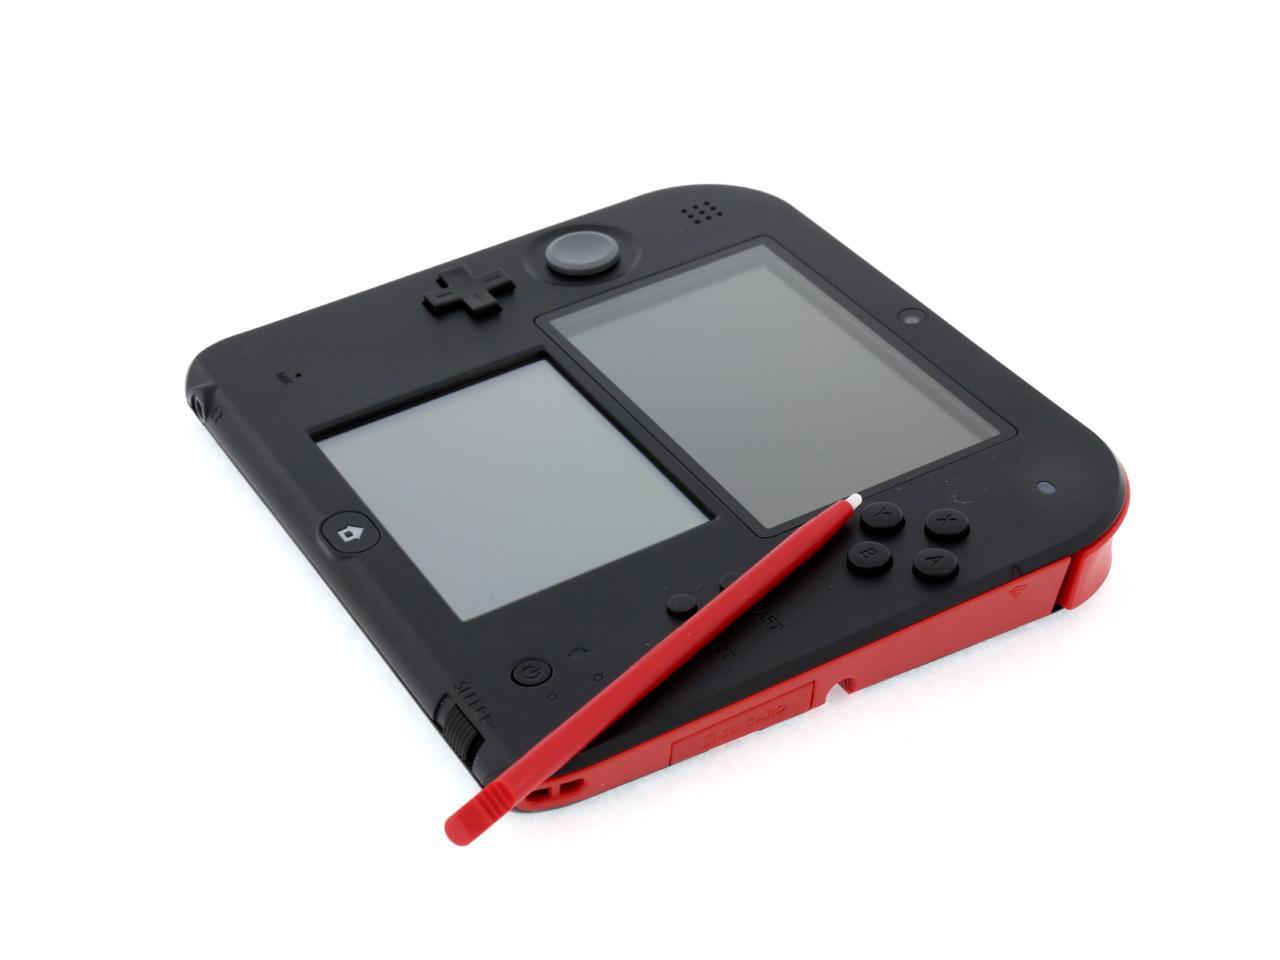 Nintendo 2DS - Red / Black